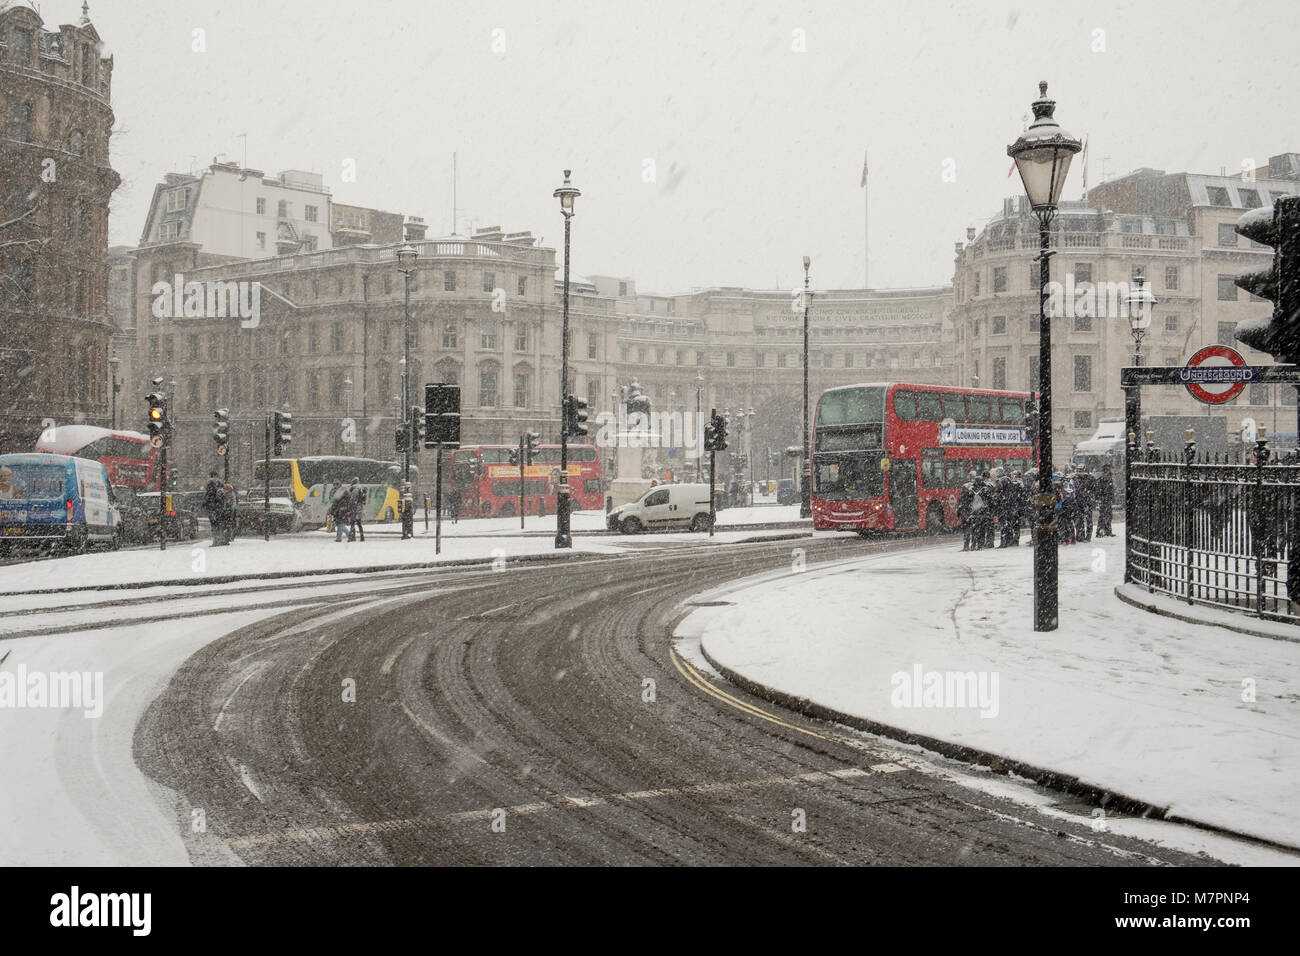 Snow fall in London winter 2018 Stock Photo